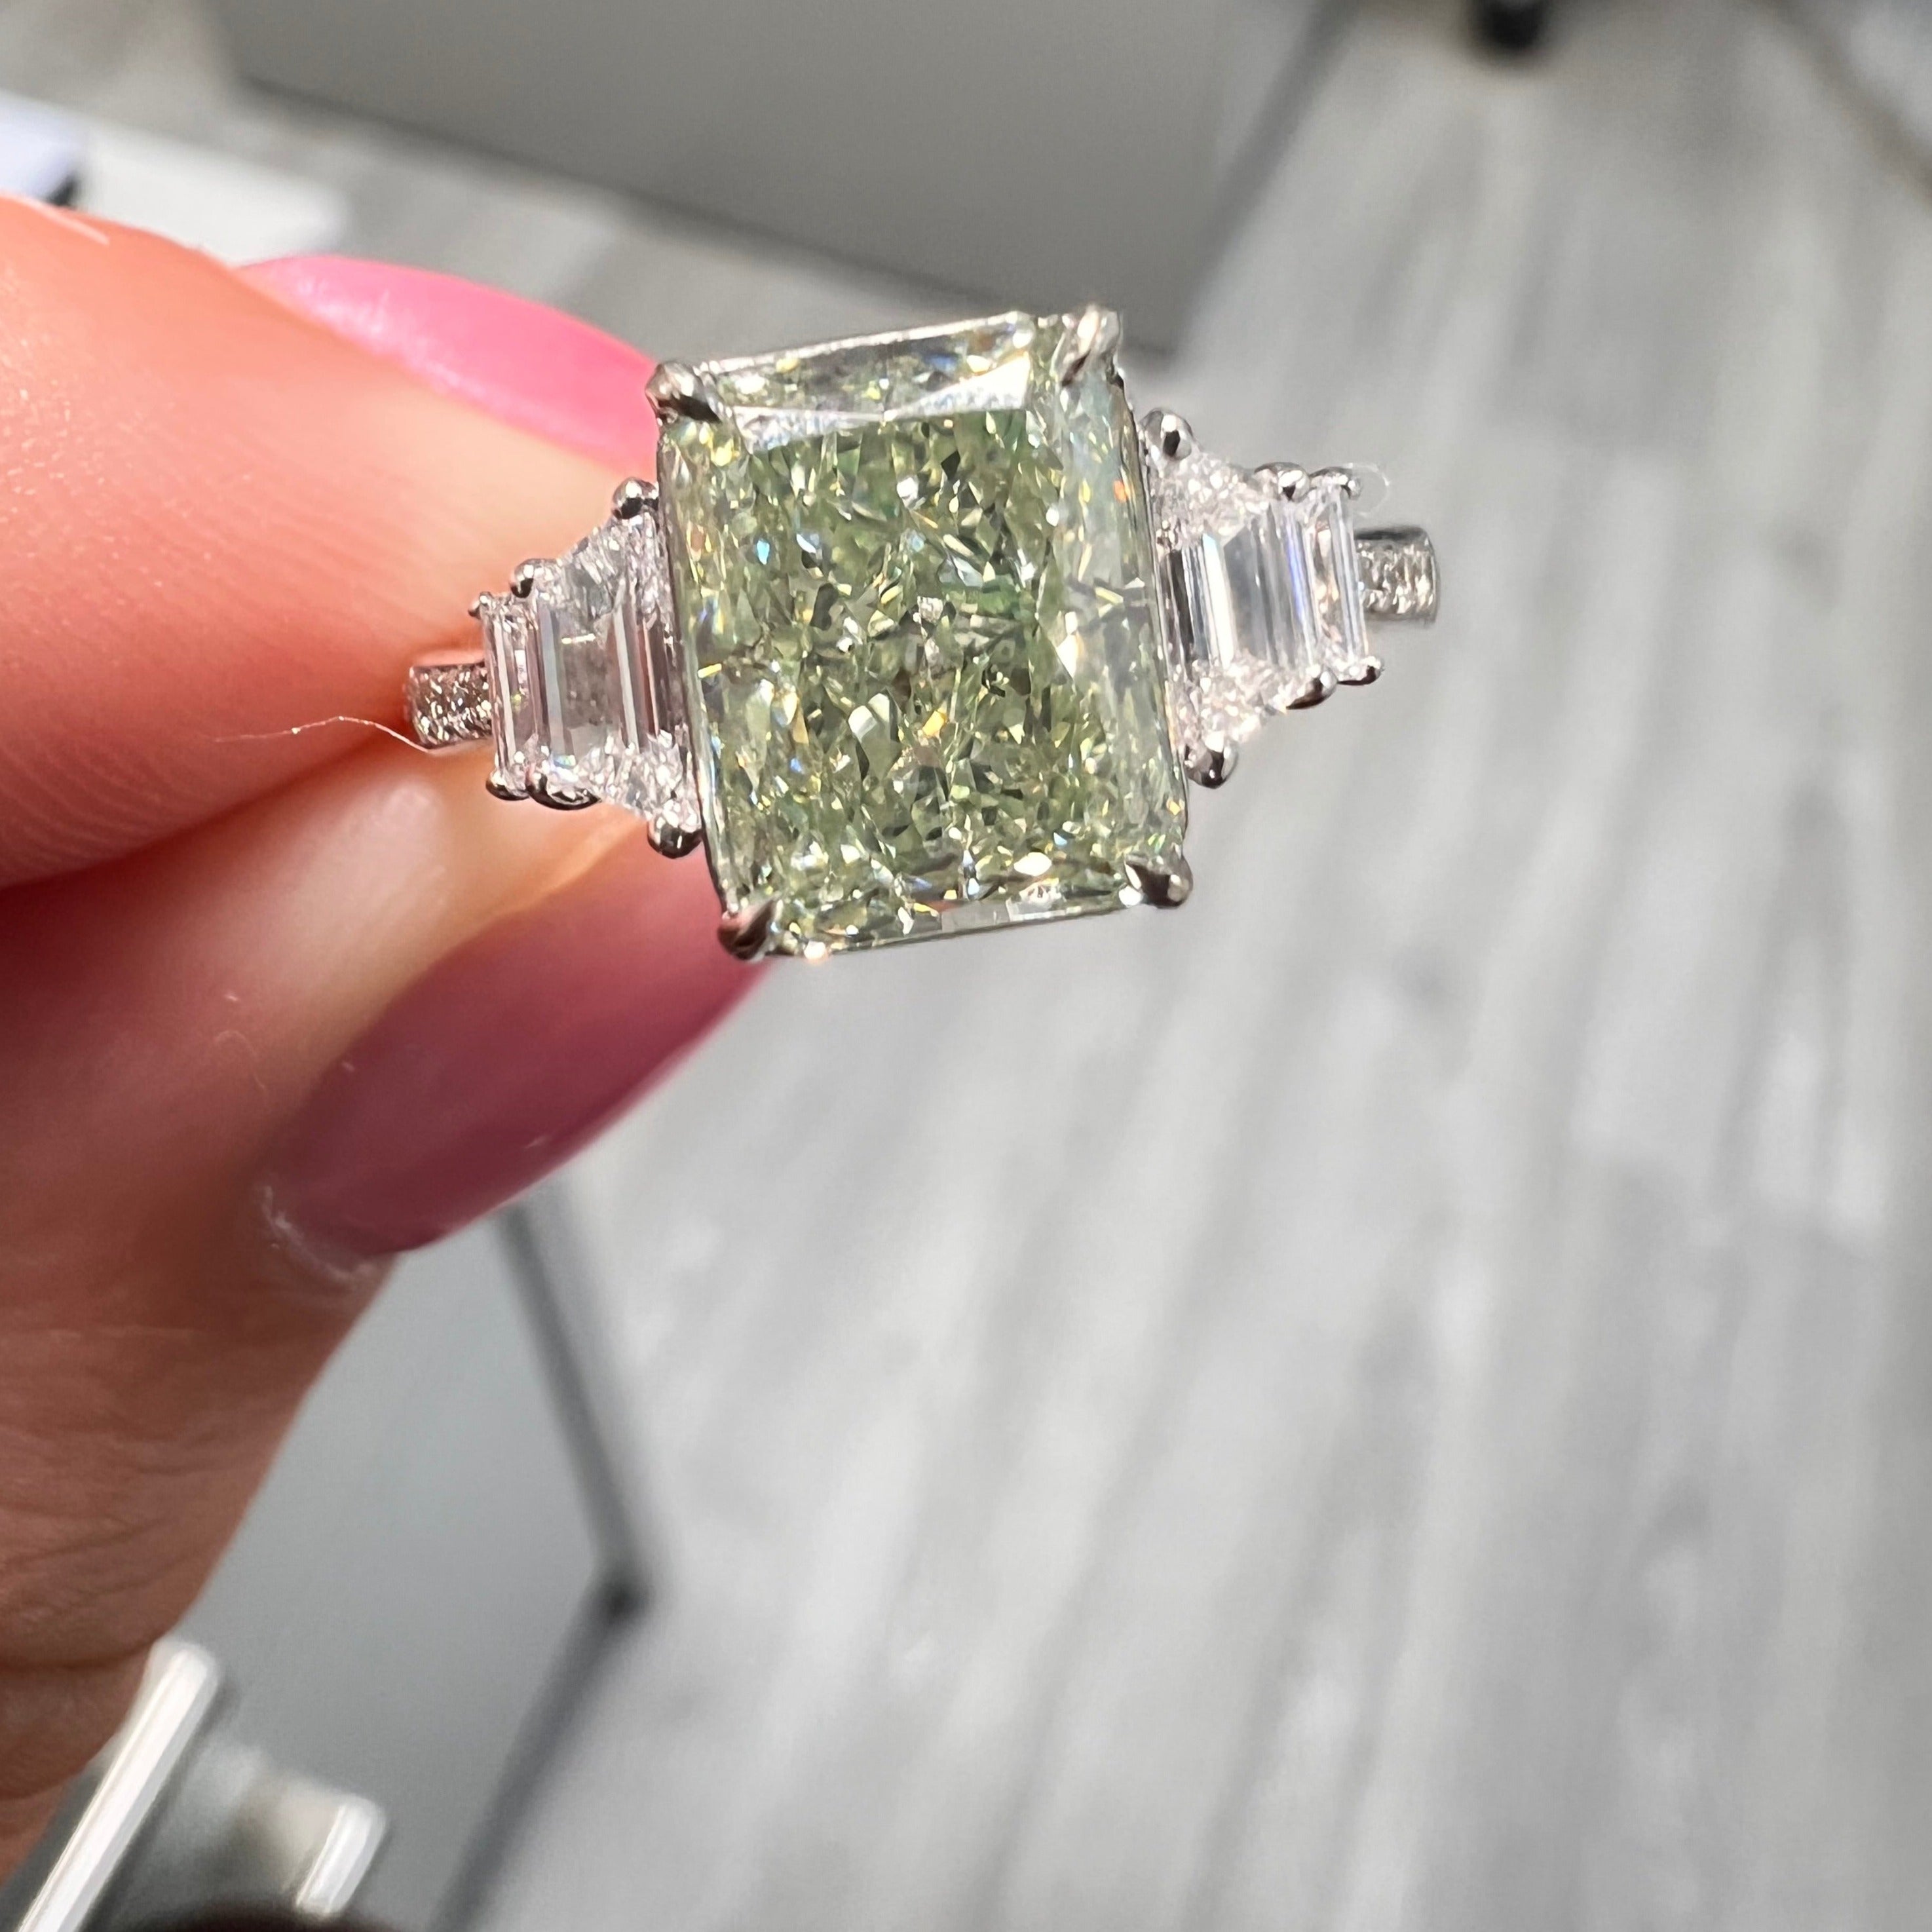 Shop Green Diamond Jewelry – Rare Colors